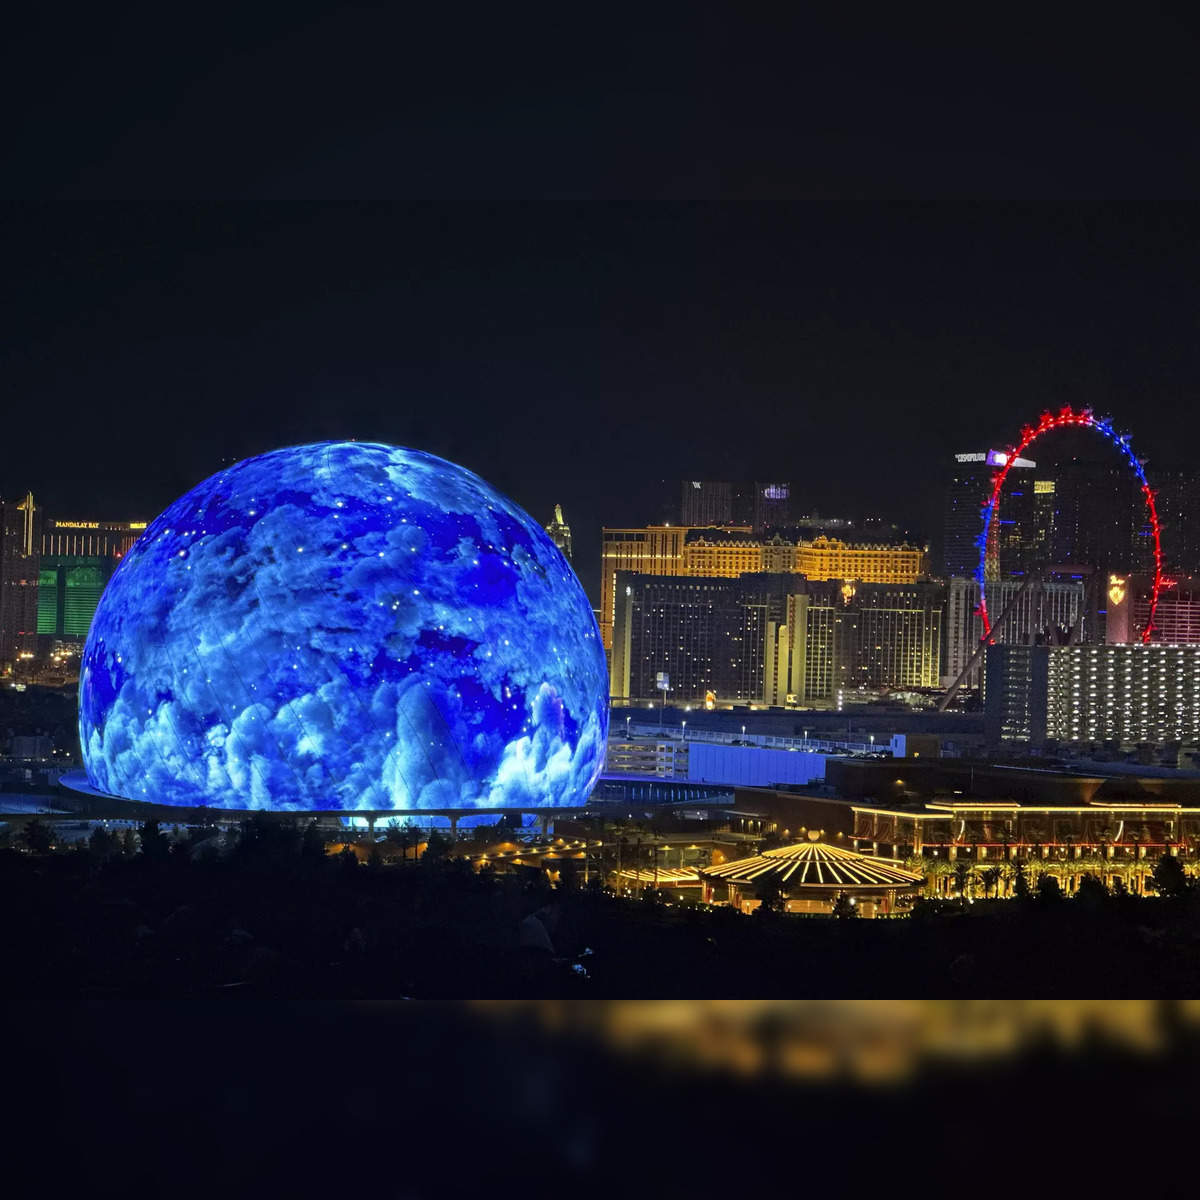 Sphere Entertainment stock jumps after U2 performs at Las Vegas venue